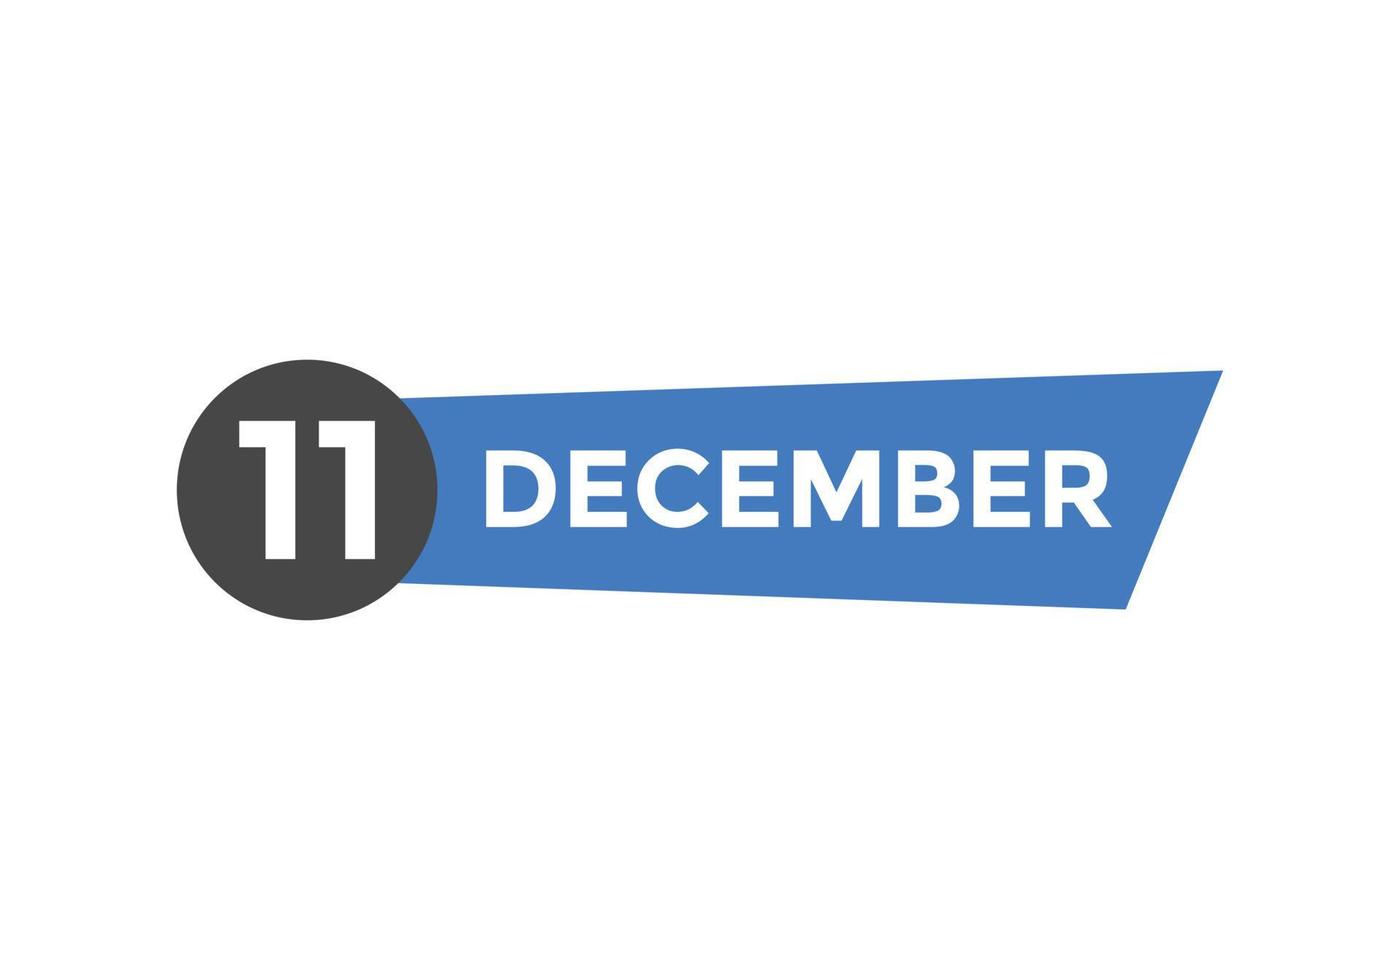 december 11 calendar reminder. 11th december daily calendar icon template. Calendar 11th december icon Design template. Vector illustration